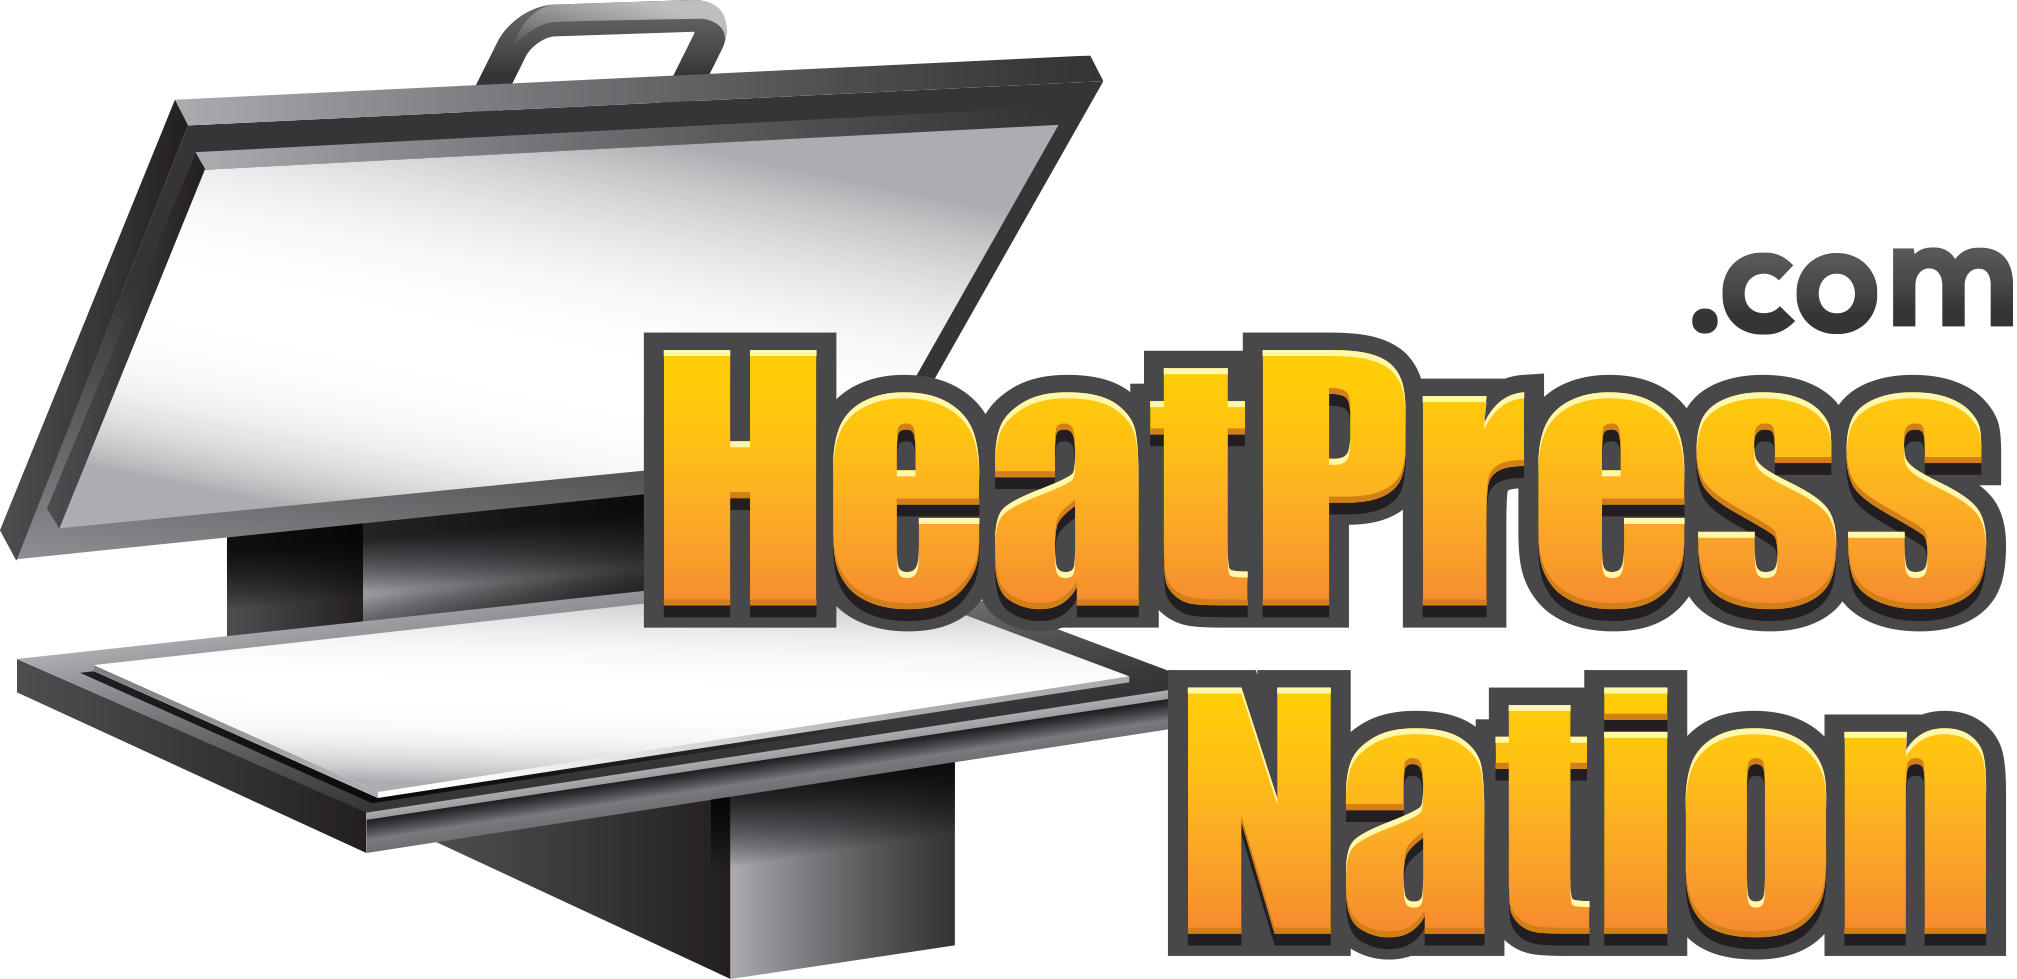 HeatPressNation logo